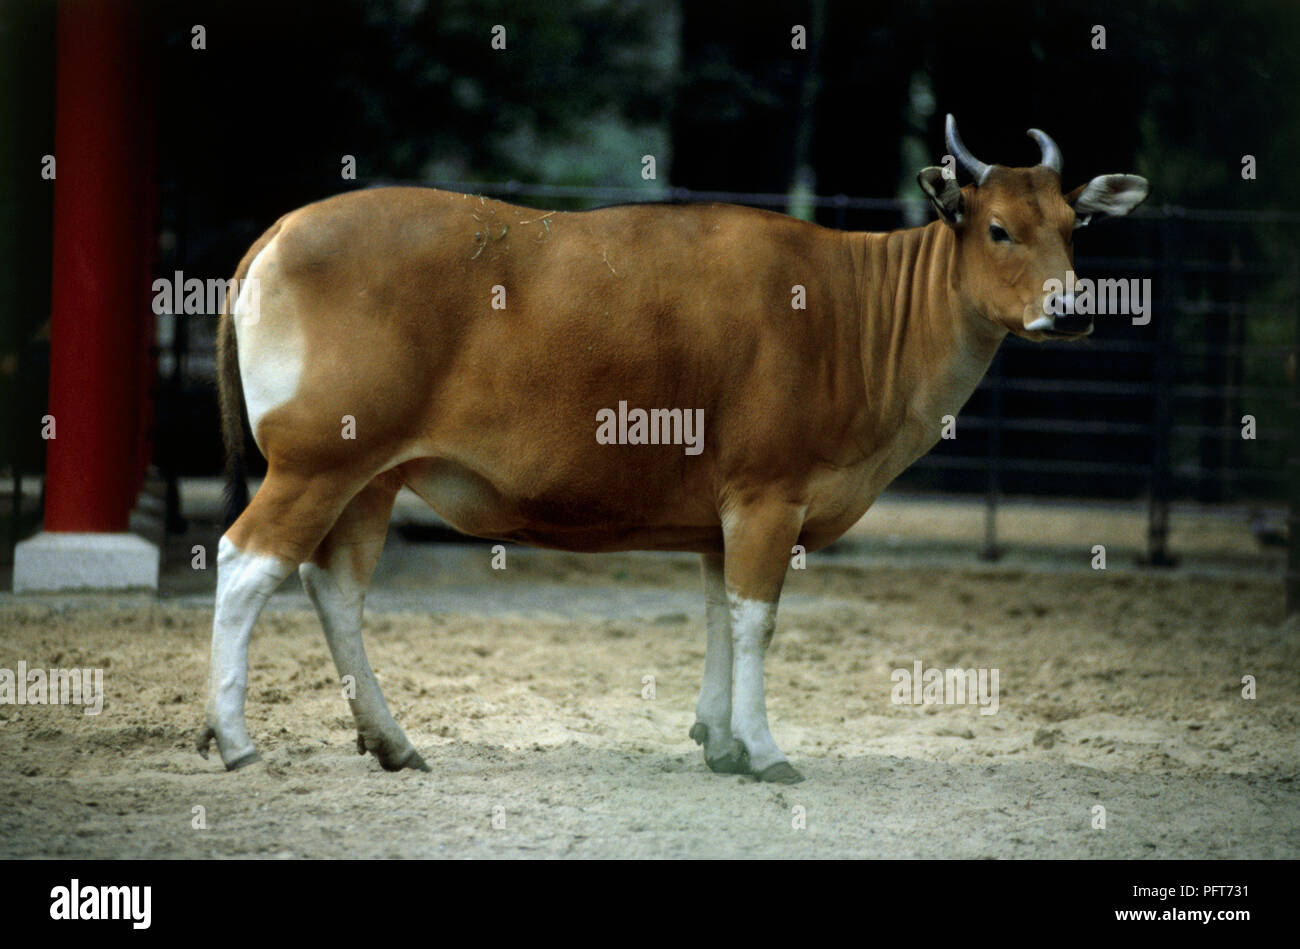 Banteng (Bos javanicus) cow standing in enclosure Stock Photo